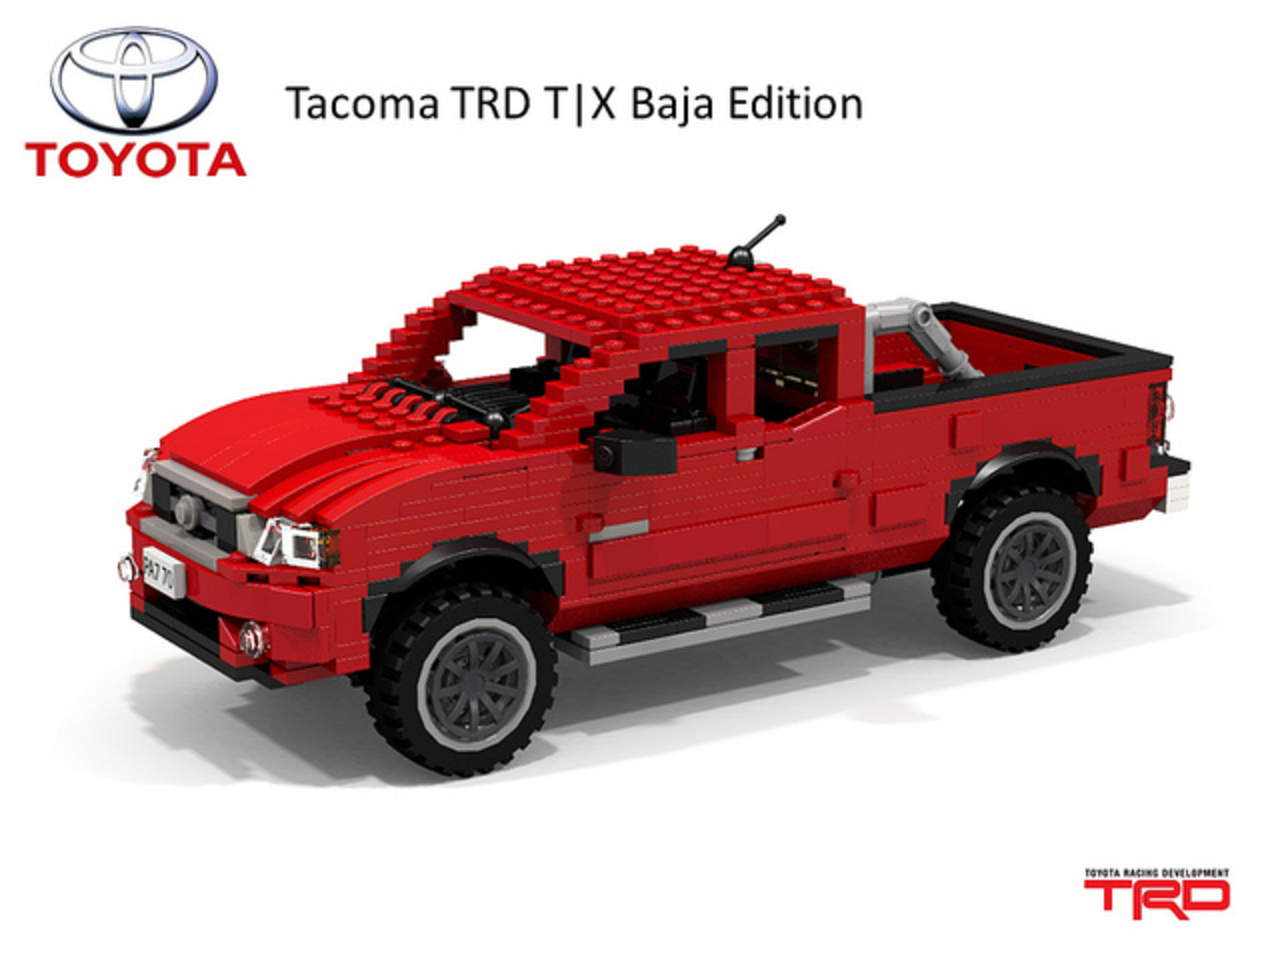 Toyota Tacoma TRD T /X Baja Edition / Flickr - Partage de photos!